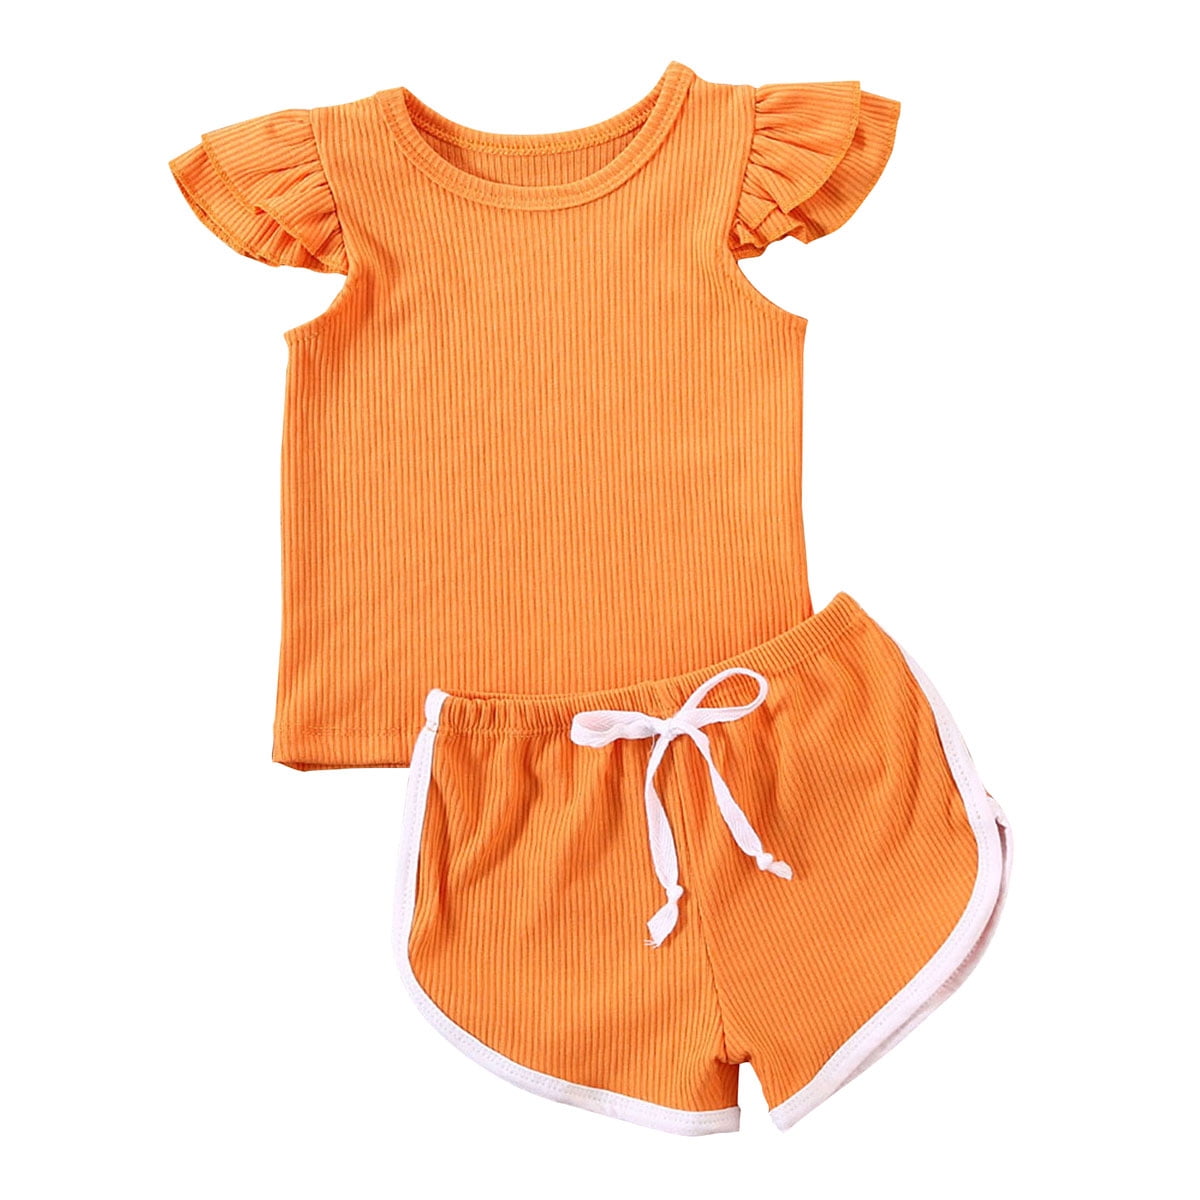 orange color dress for baby girl